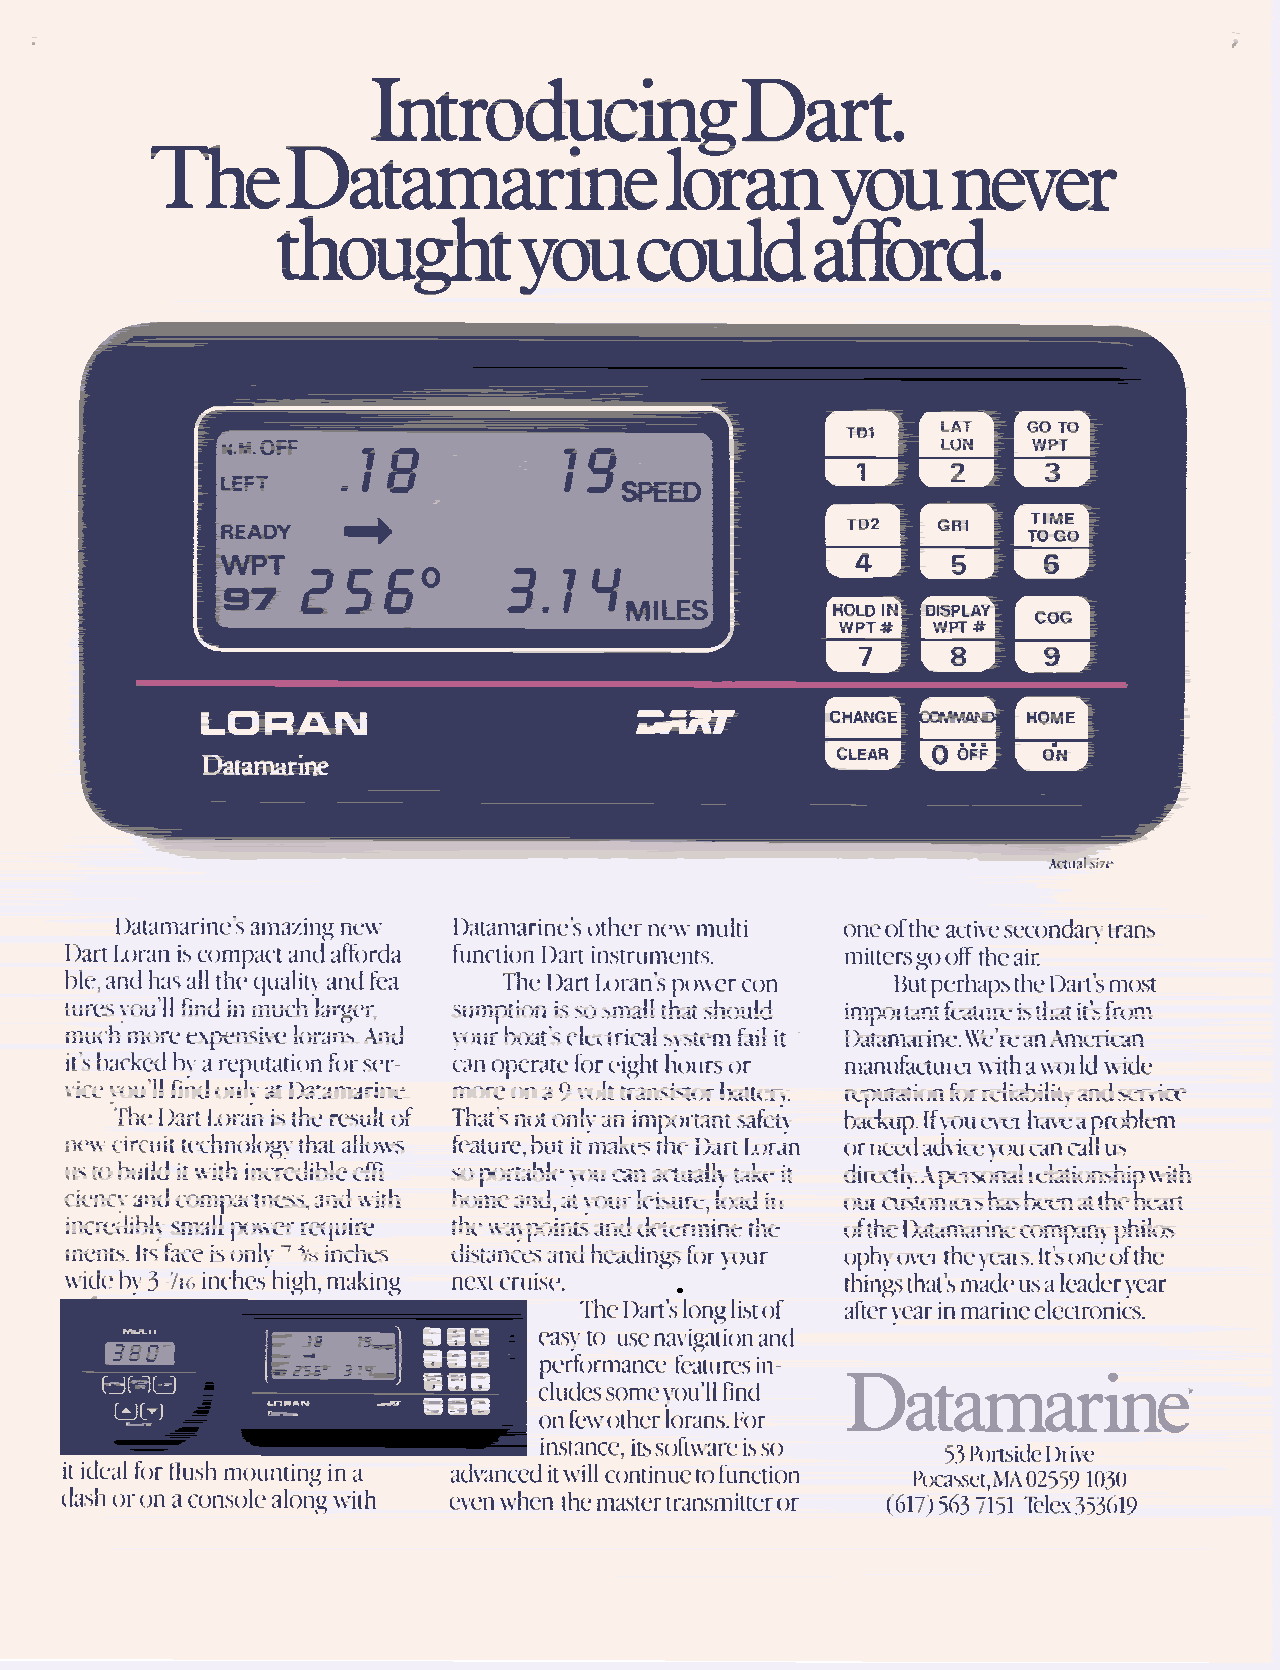 Datamarine Dart – Loran system